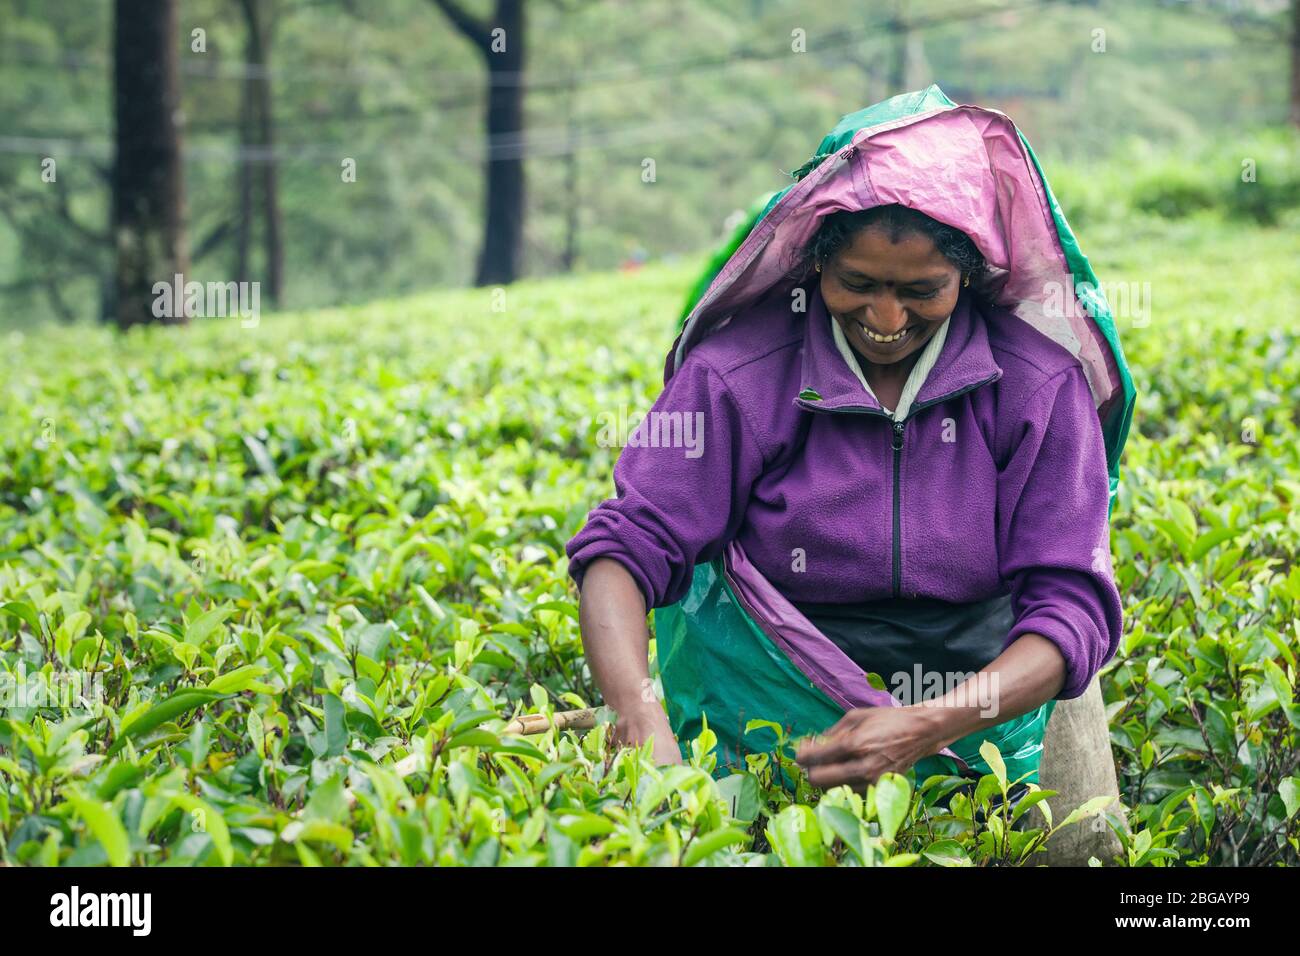 Nuwara Eliya, Sri Lanka. July 25, 2016: Woman working on Sri Lankan tea plantation. A woman from Nuwara Eliya is picking tea leaves at a plantation in Stock Photo